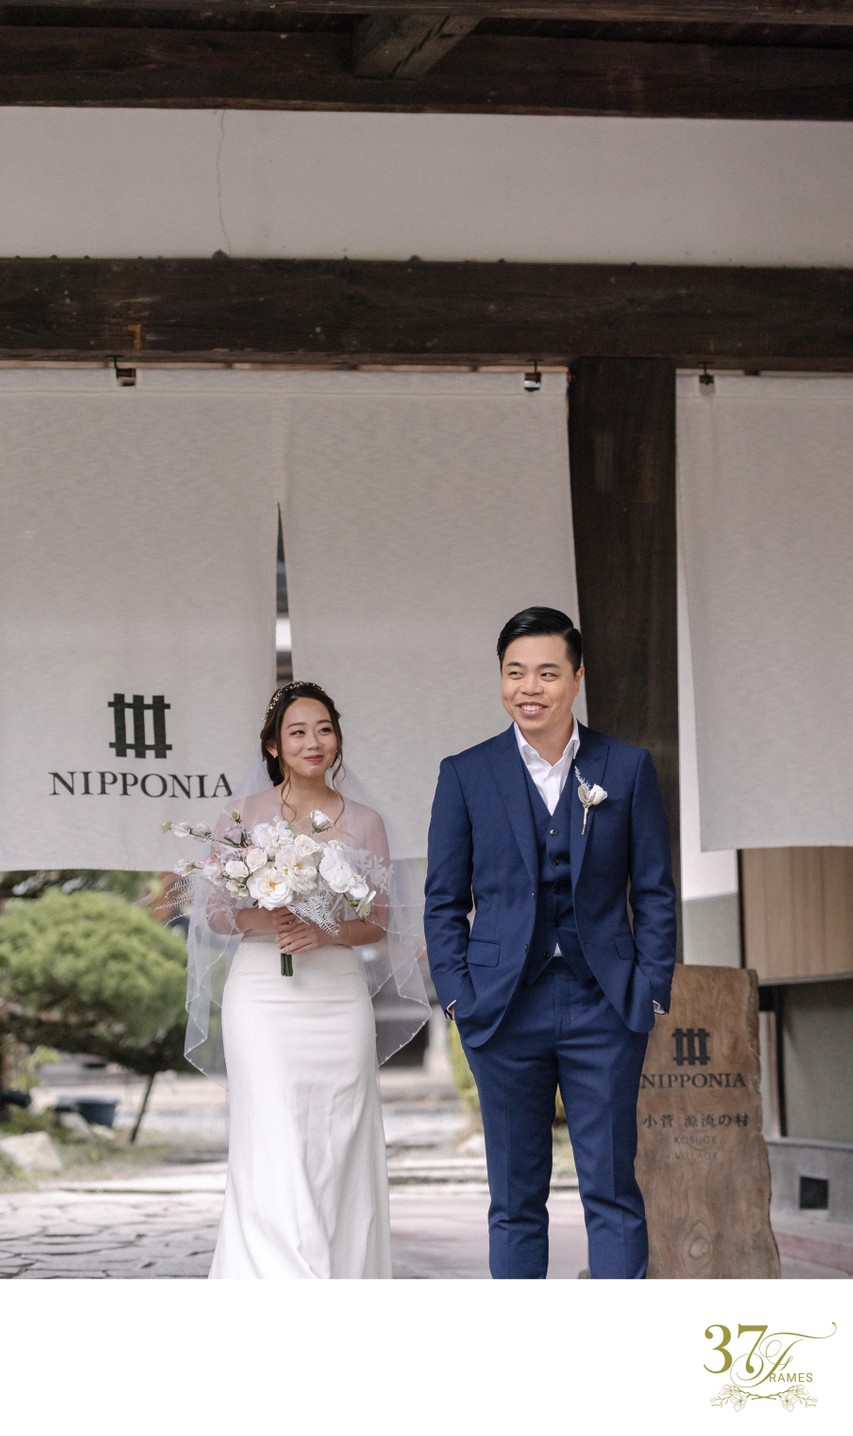 A Stunning Fall Wedding at Nipponia's Mountain Retreat